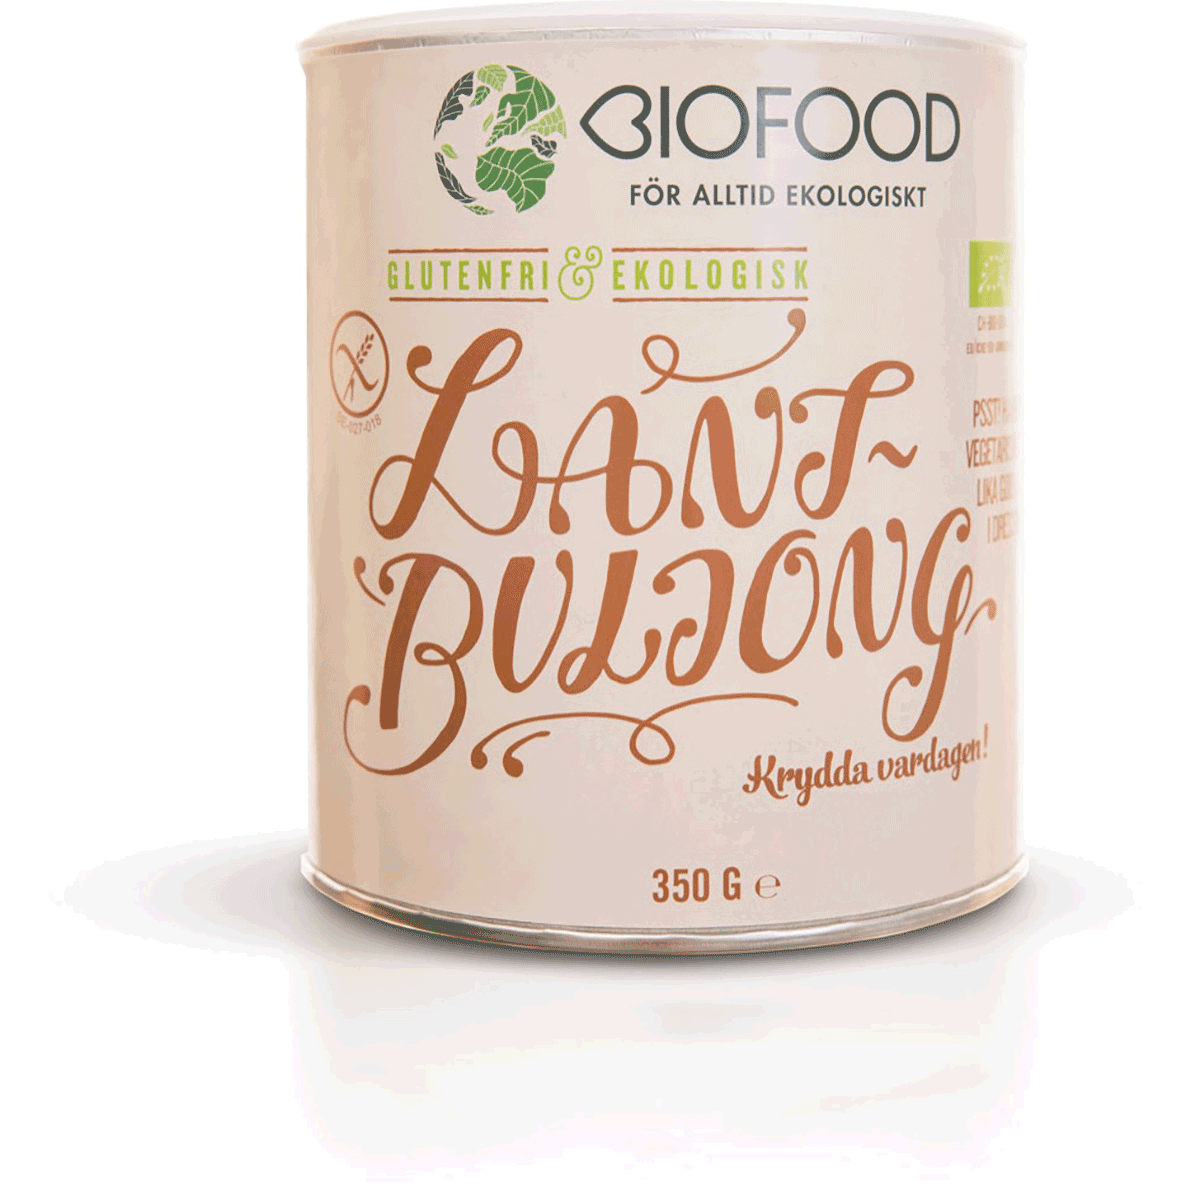 Biofood's Landbrühe'